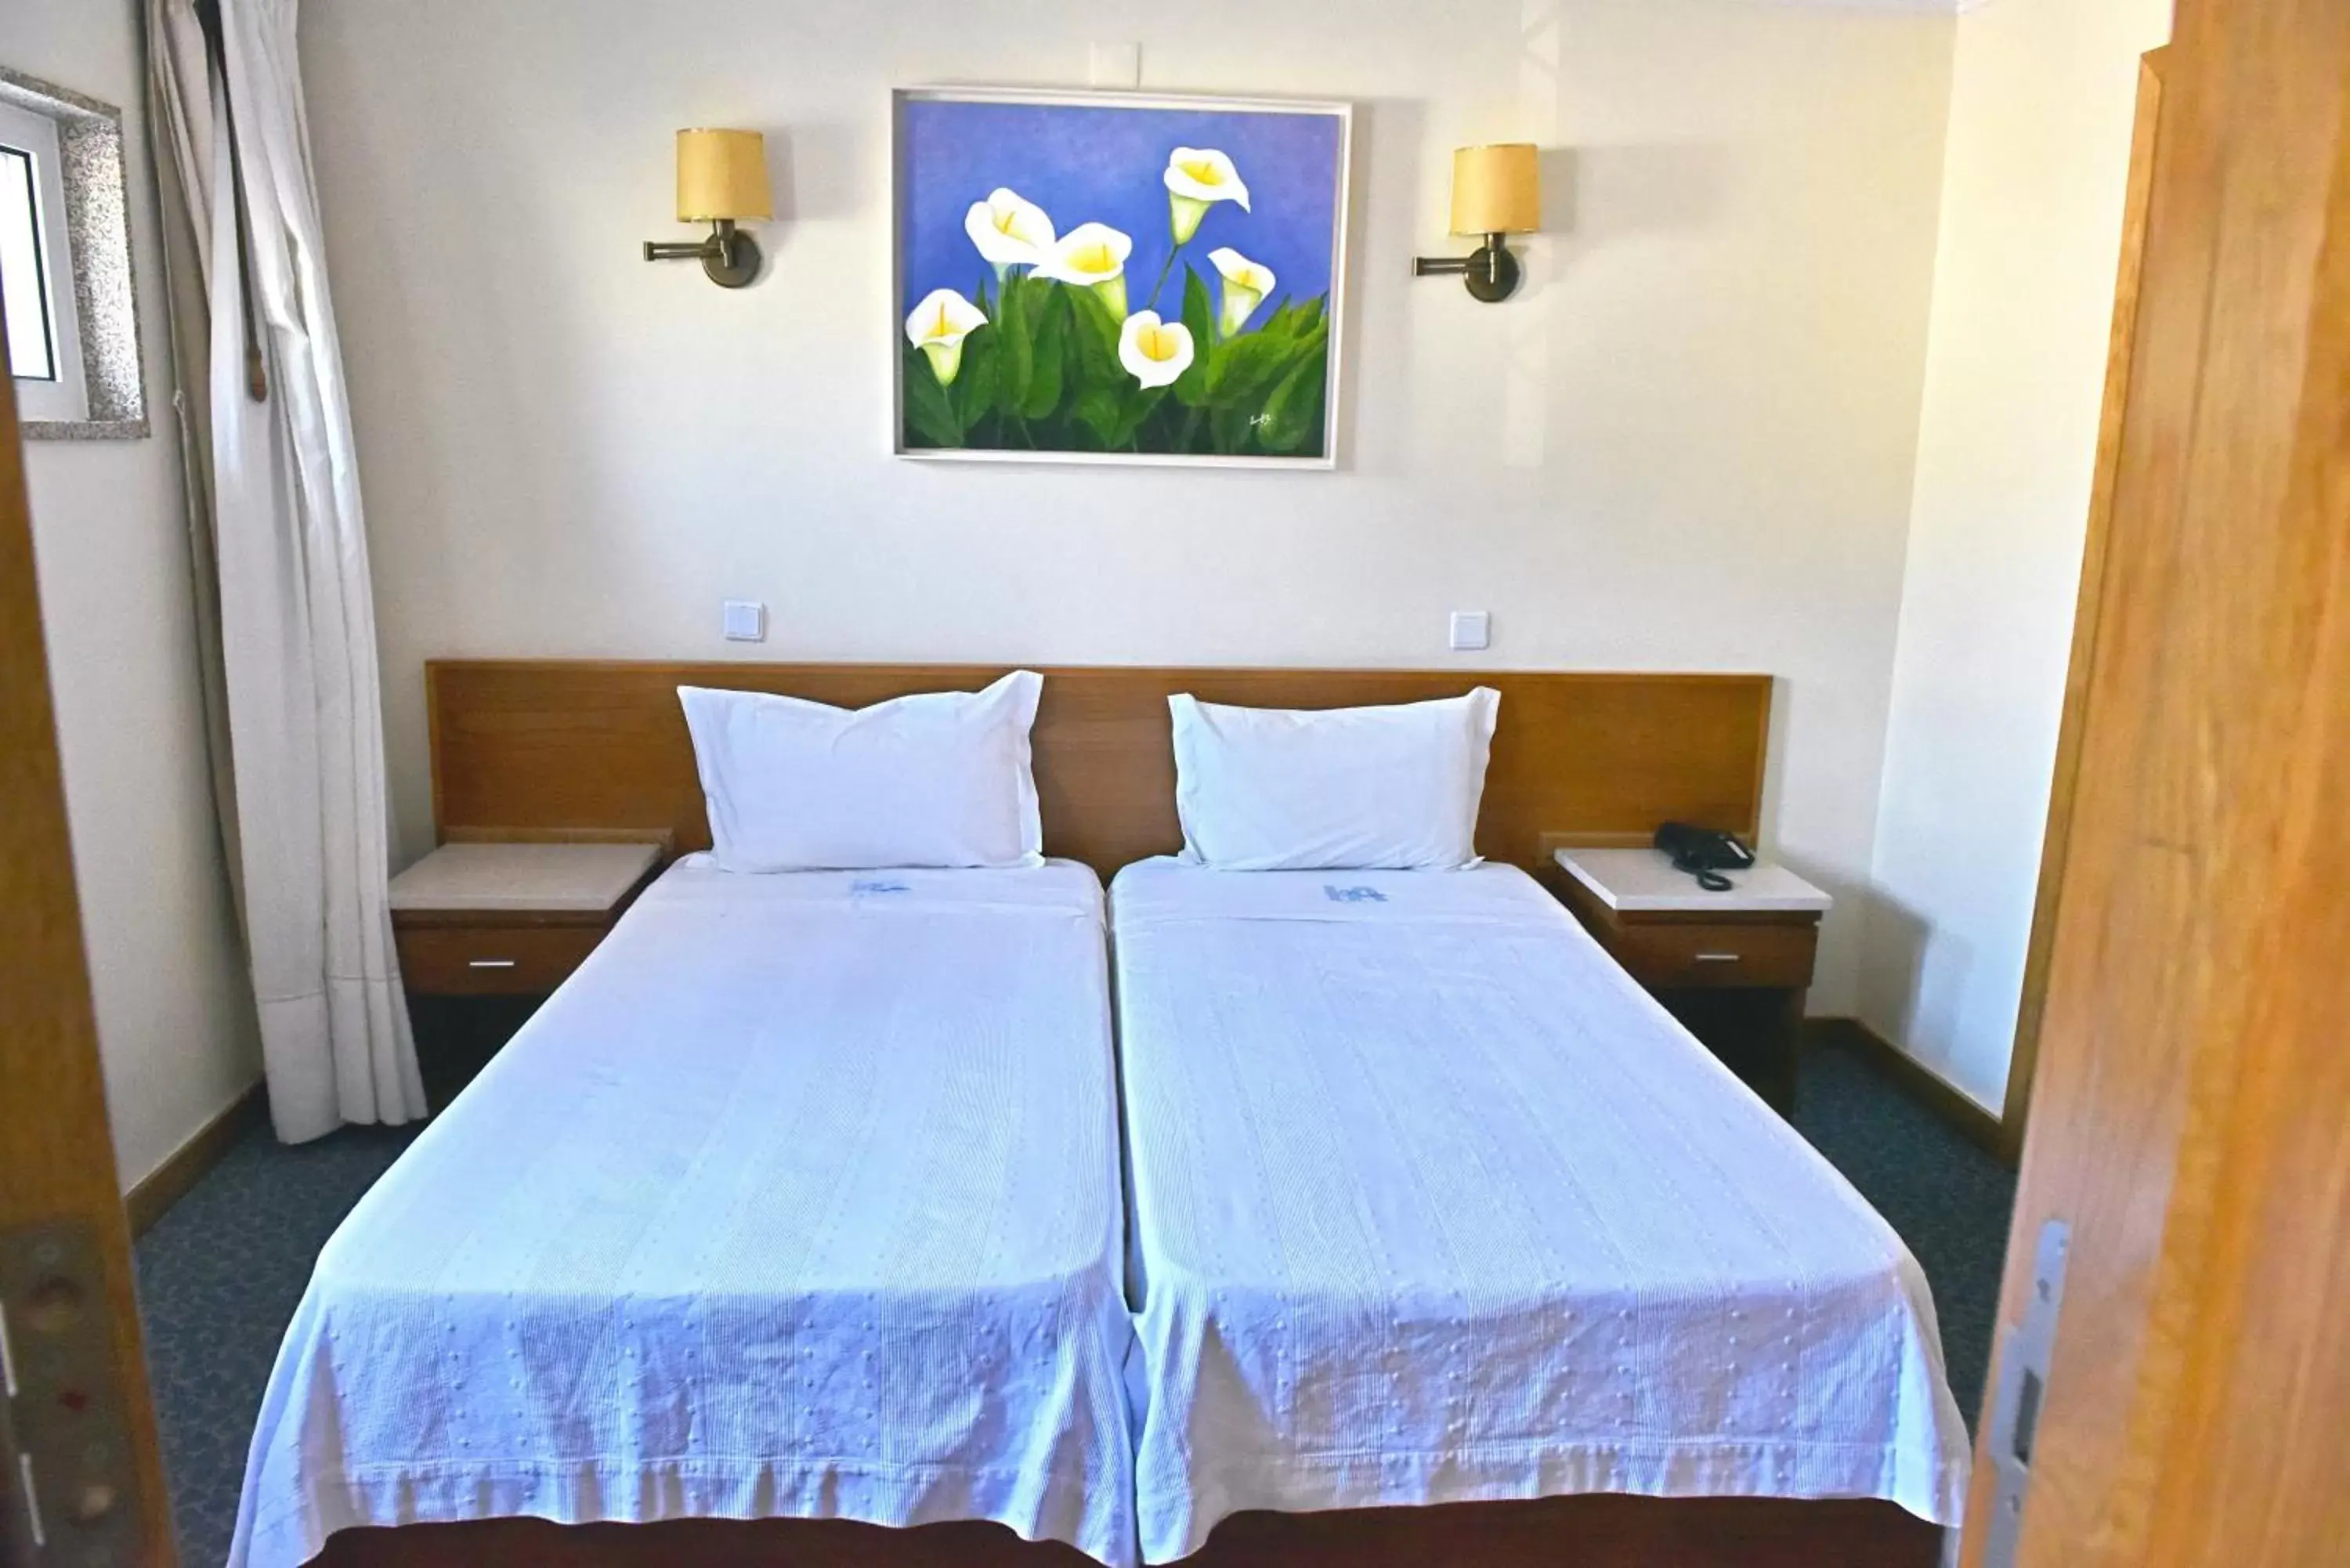 Bed, Room Photo in Hotel Aeroporto